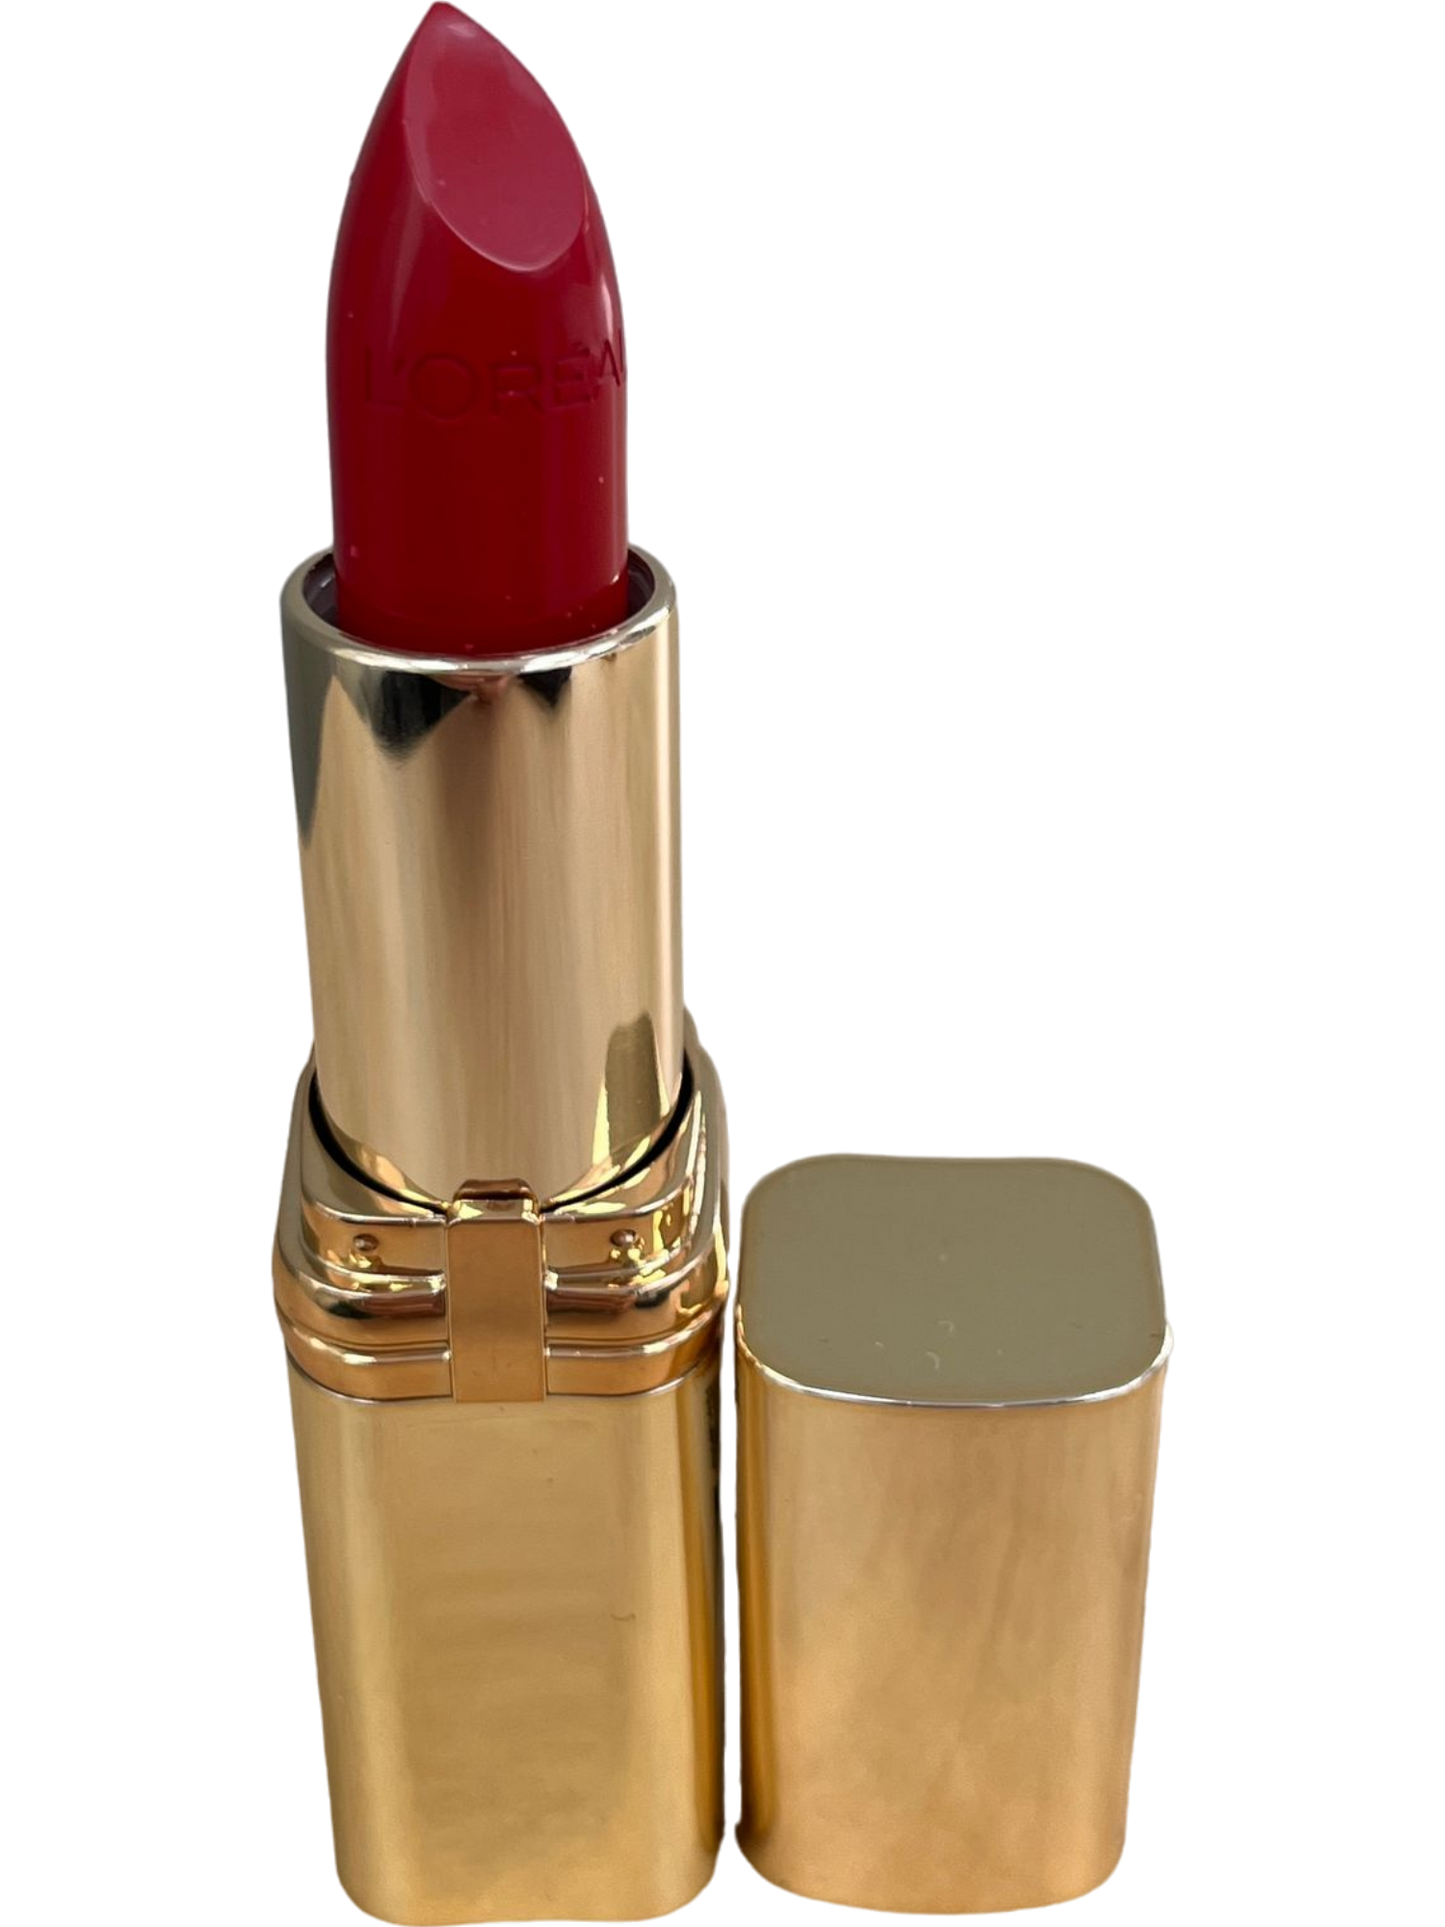 L'Oreal Paris Colour Riche Original Satin Lipstick Maison Marais BNIB